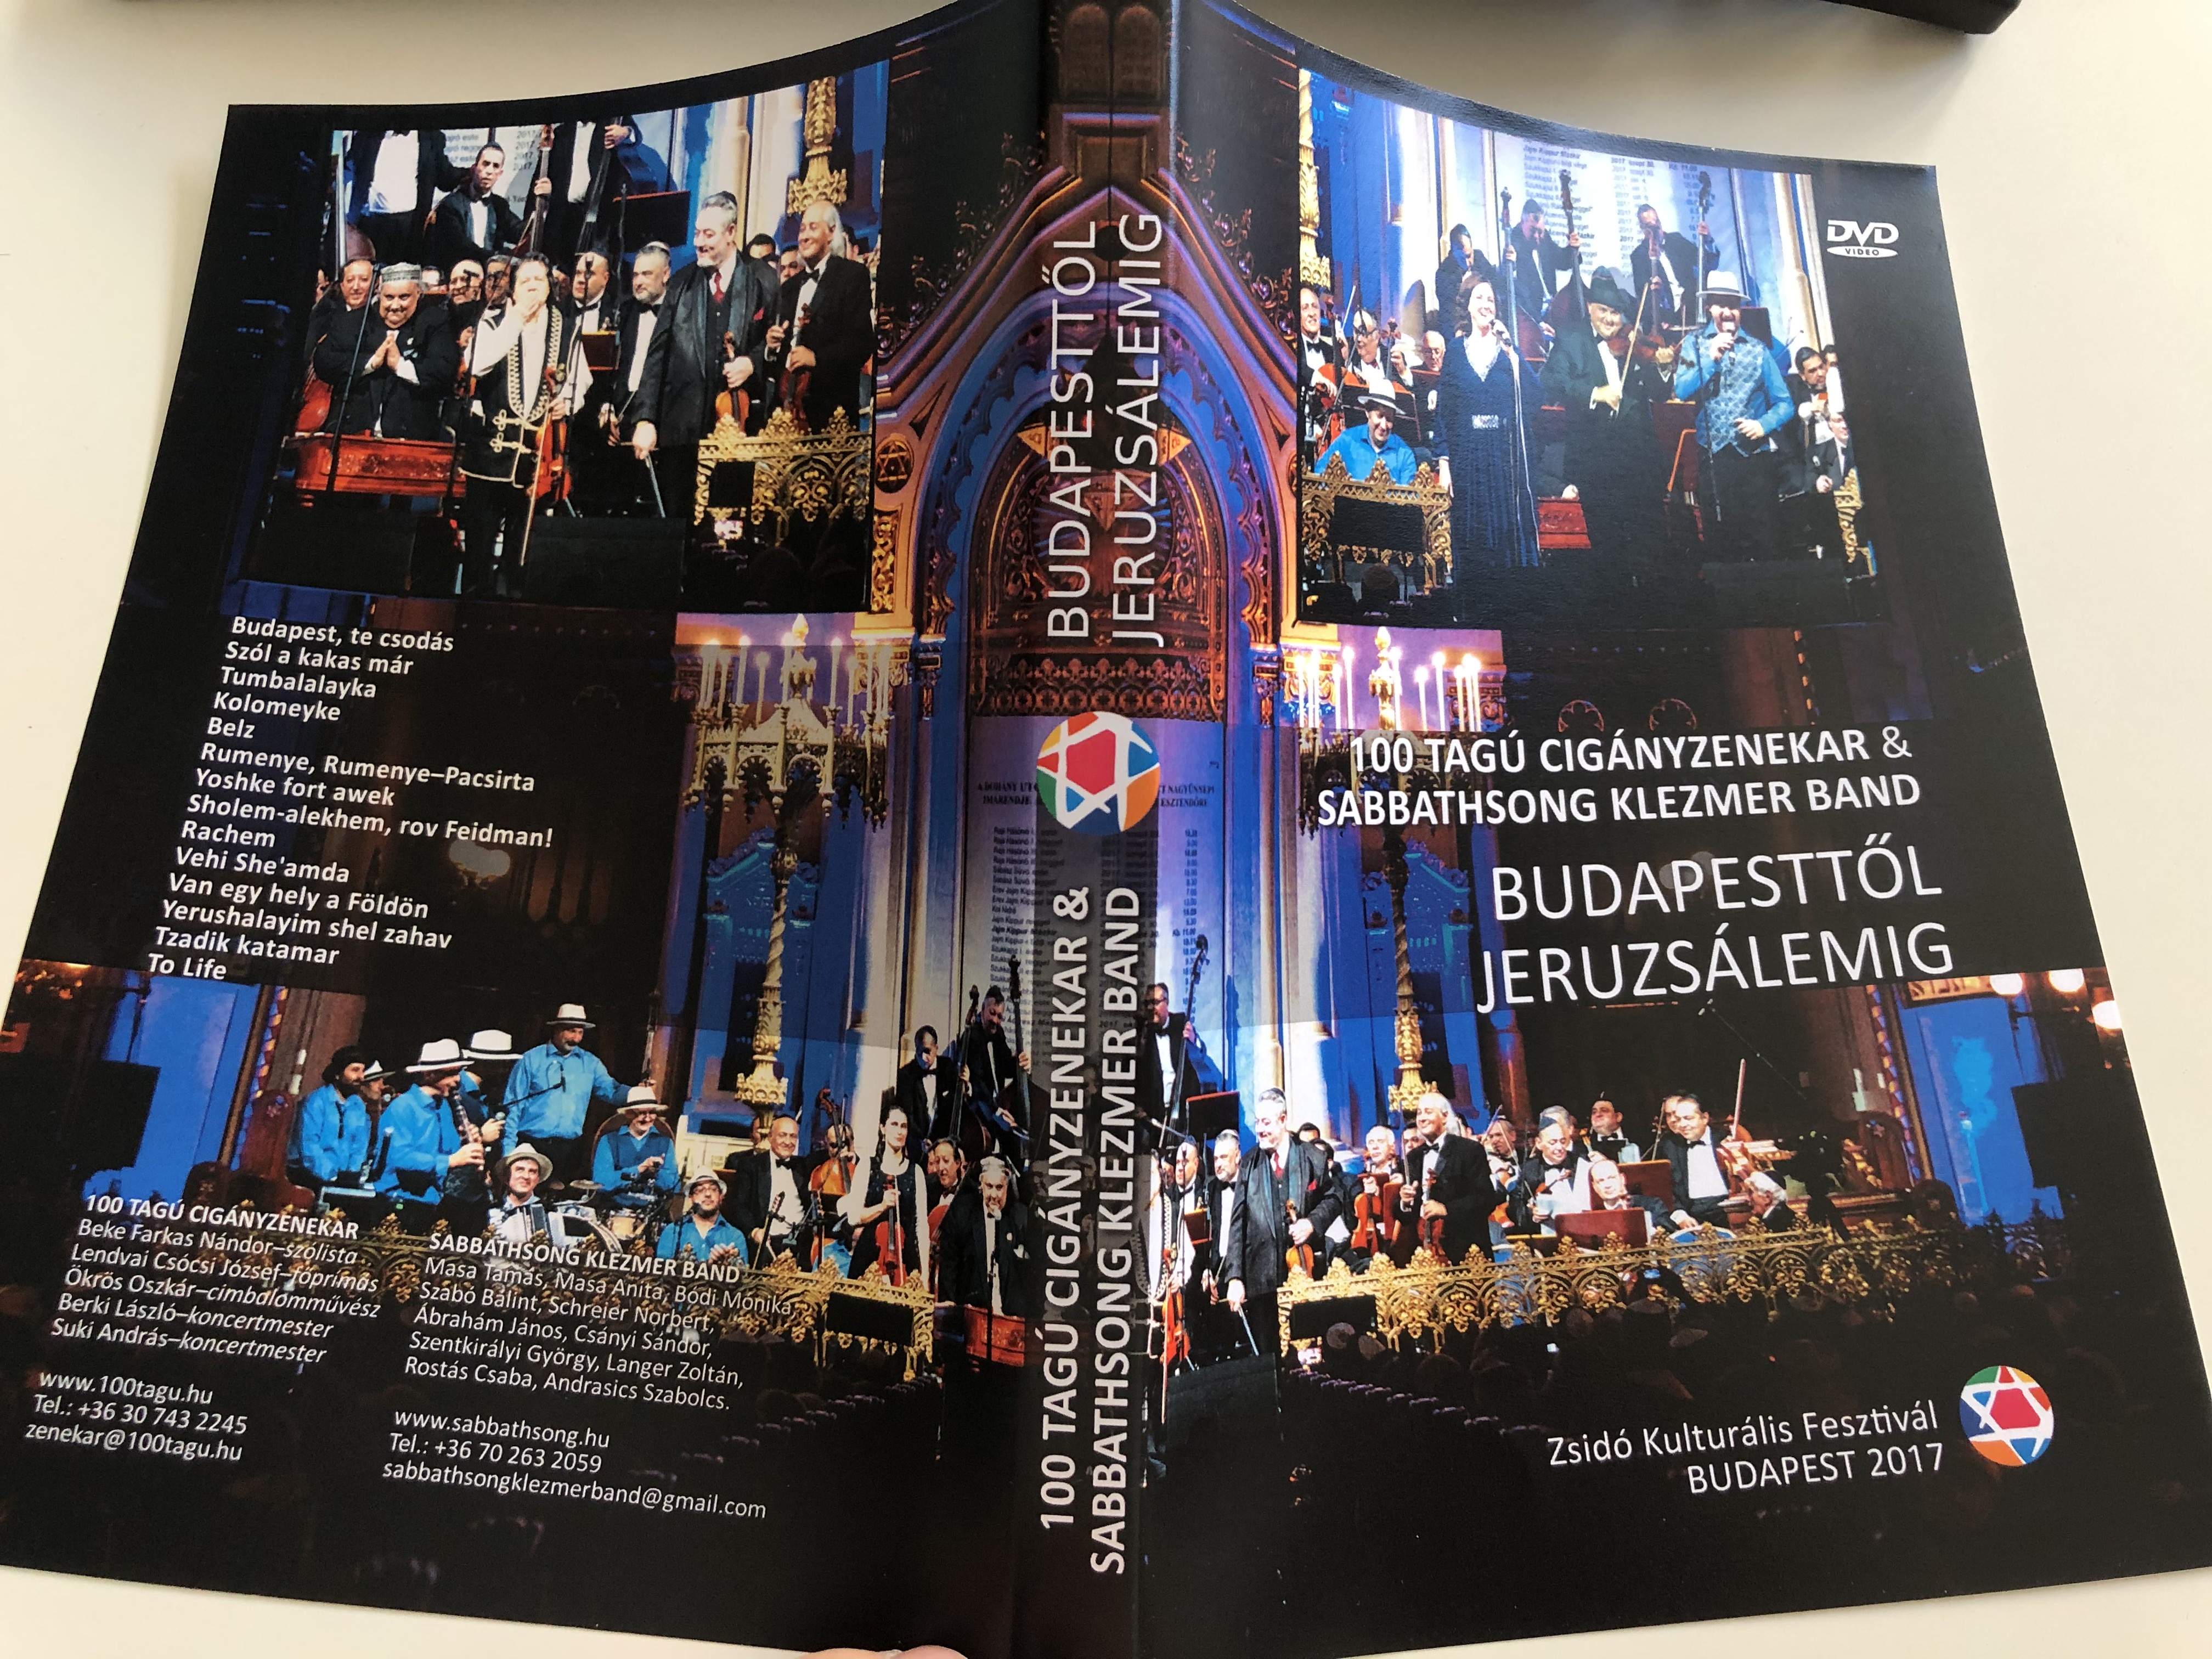 budapestt-l-jeruzs-lemig-dvd-2017-100-tag-cig-nyzenekar-sabbathsong-klezmer-band-from-budapest-to-jerusalem-4-.jpg